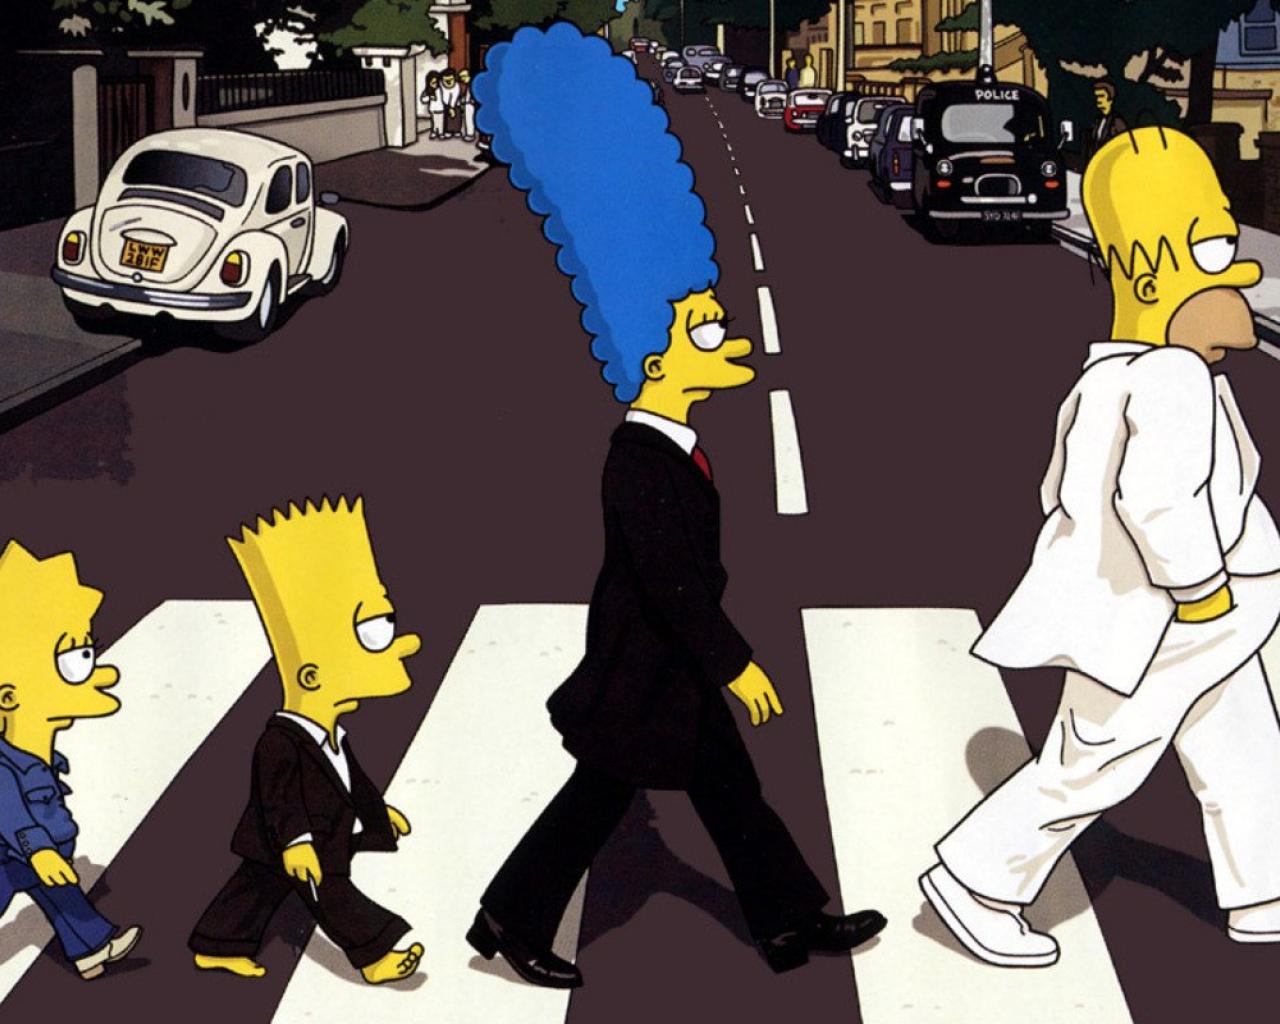 Abbey Road Beatles The Simpsons HD Wallpaper Hq Desktop